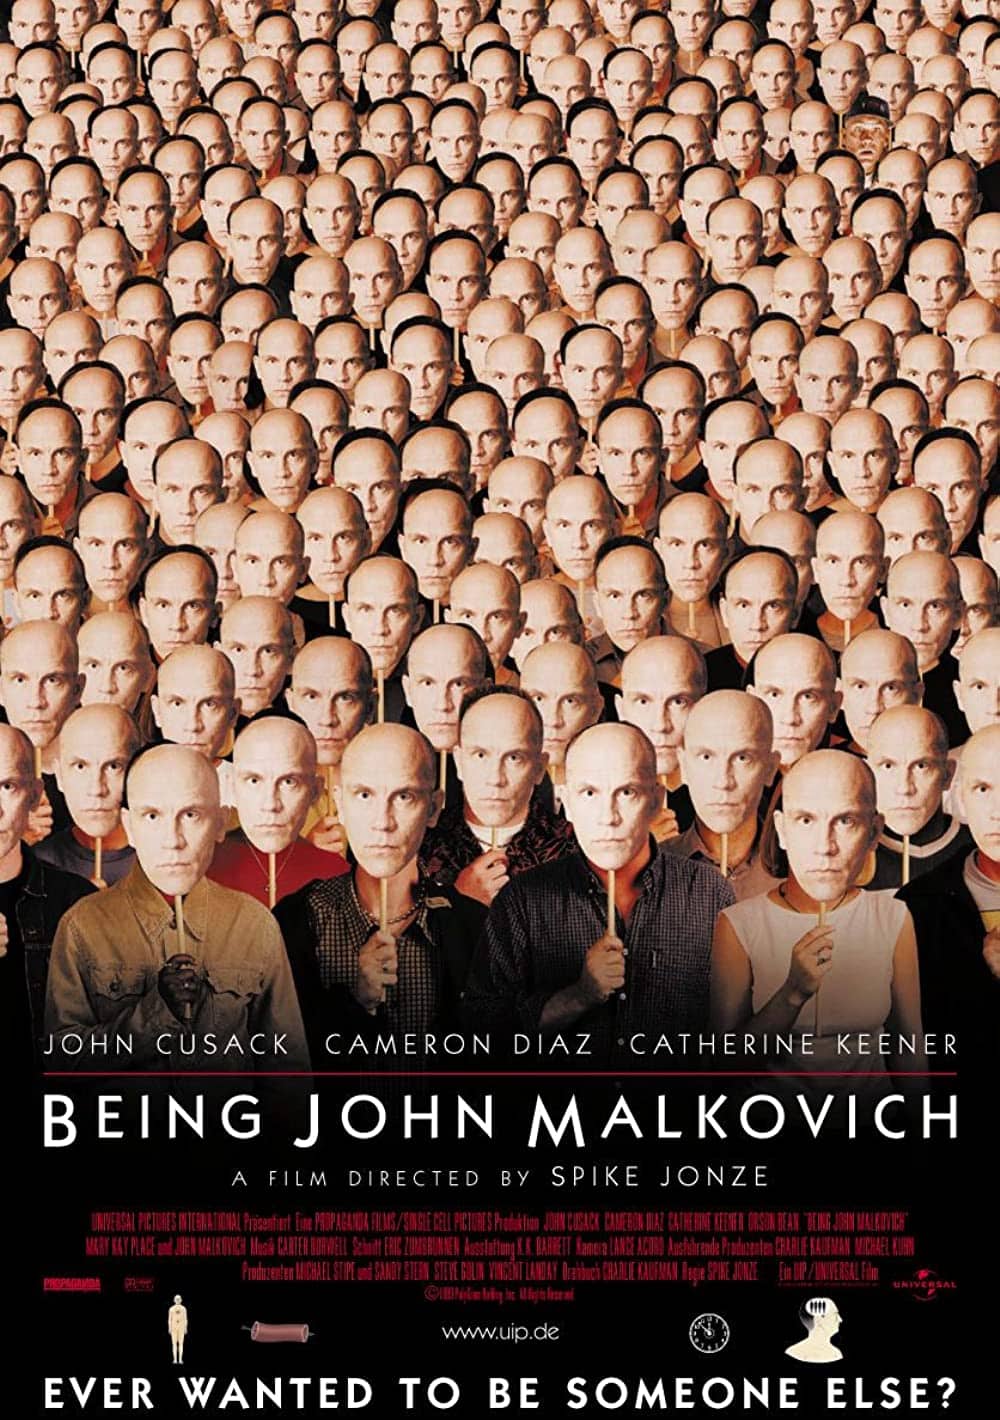 Being John Malkovich (1999) Best John Cusack Movies (Ranked)